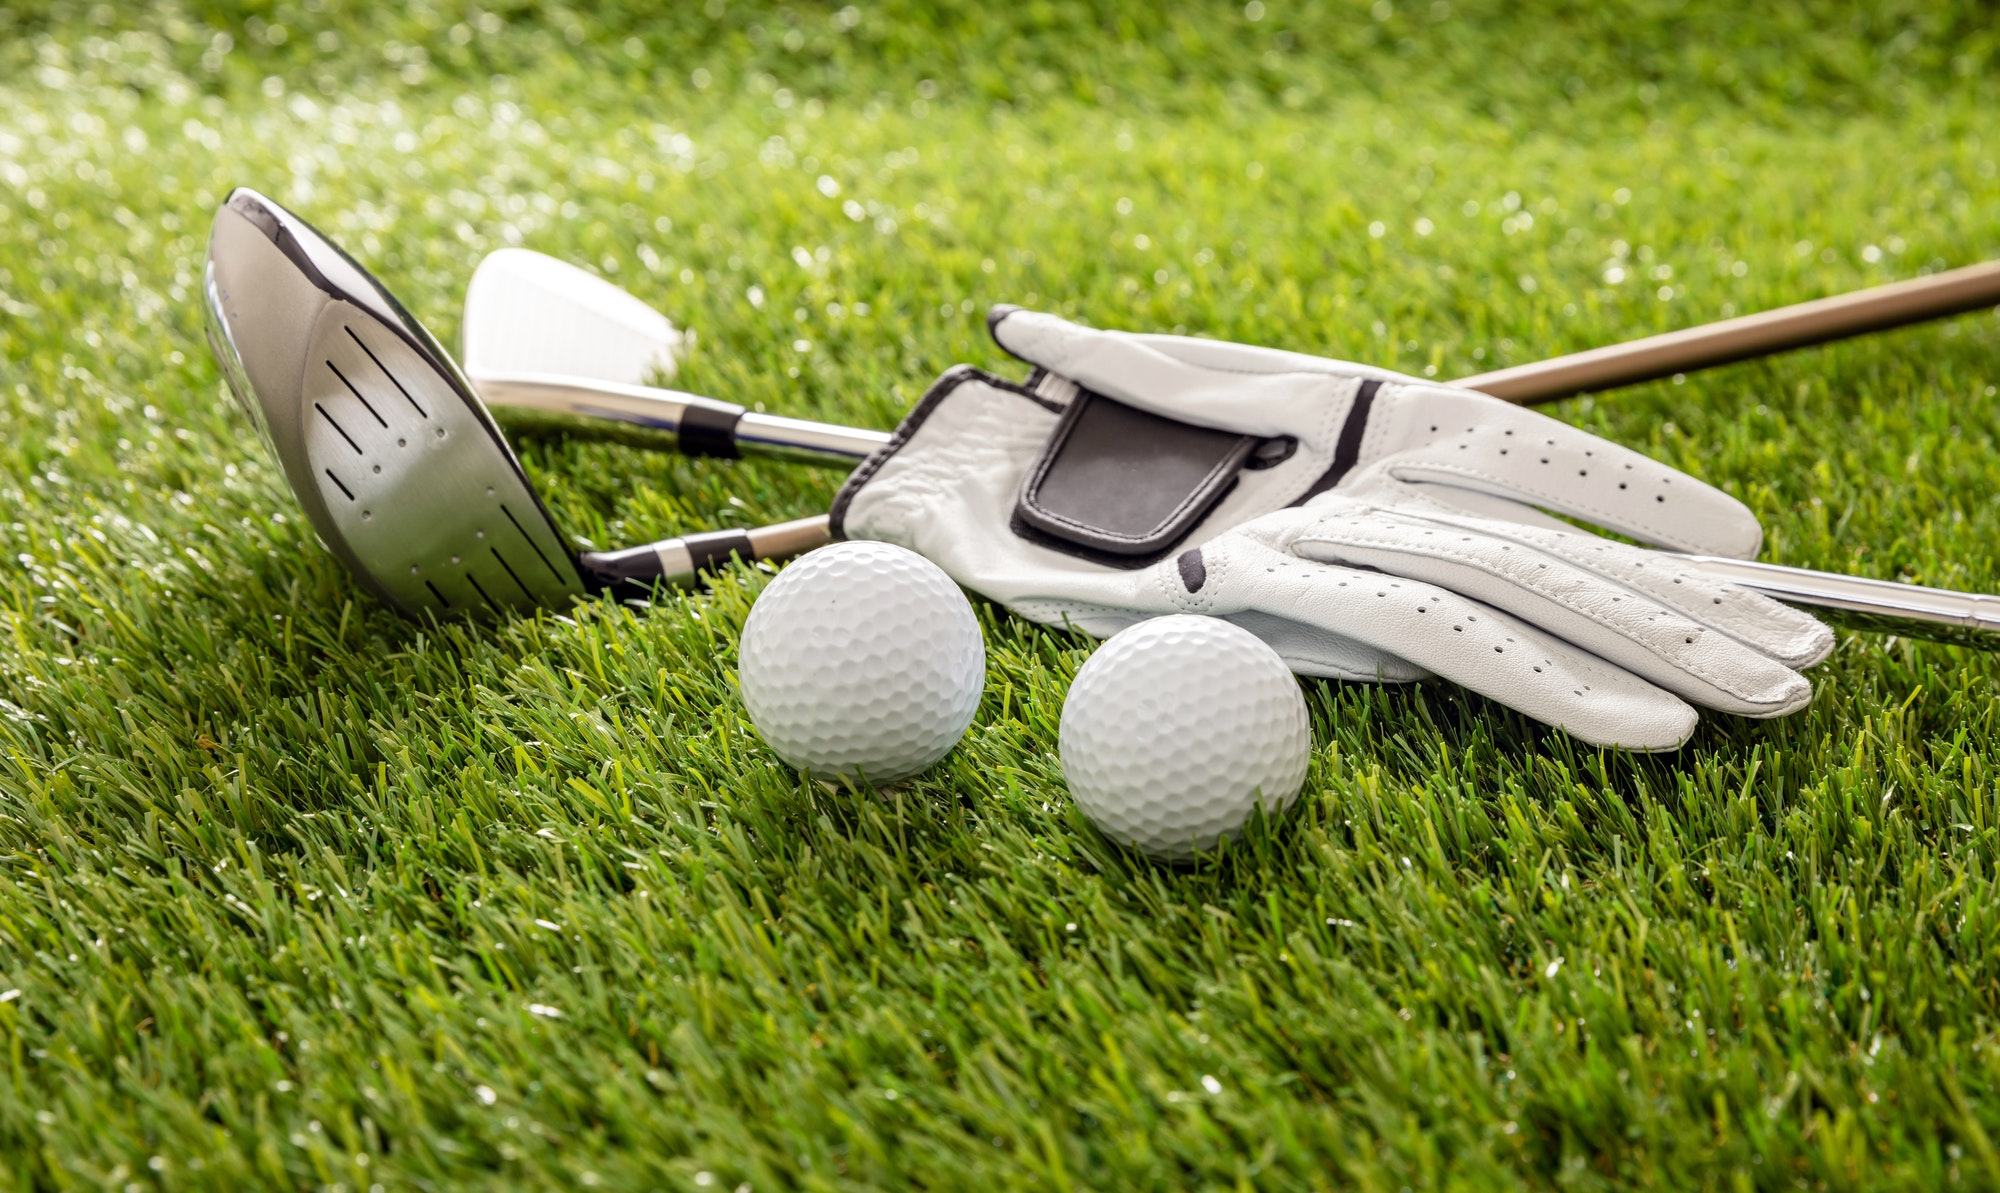 Golf equipment on green grass golf course, close up view.